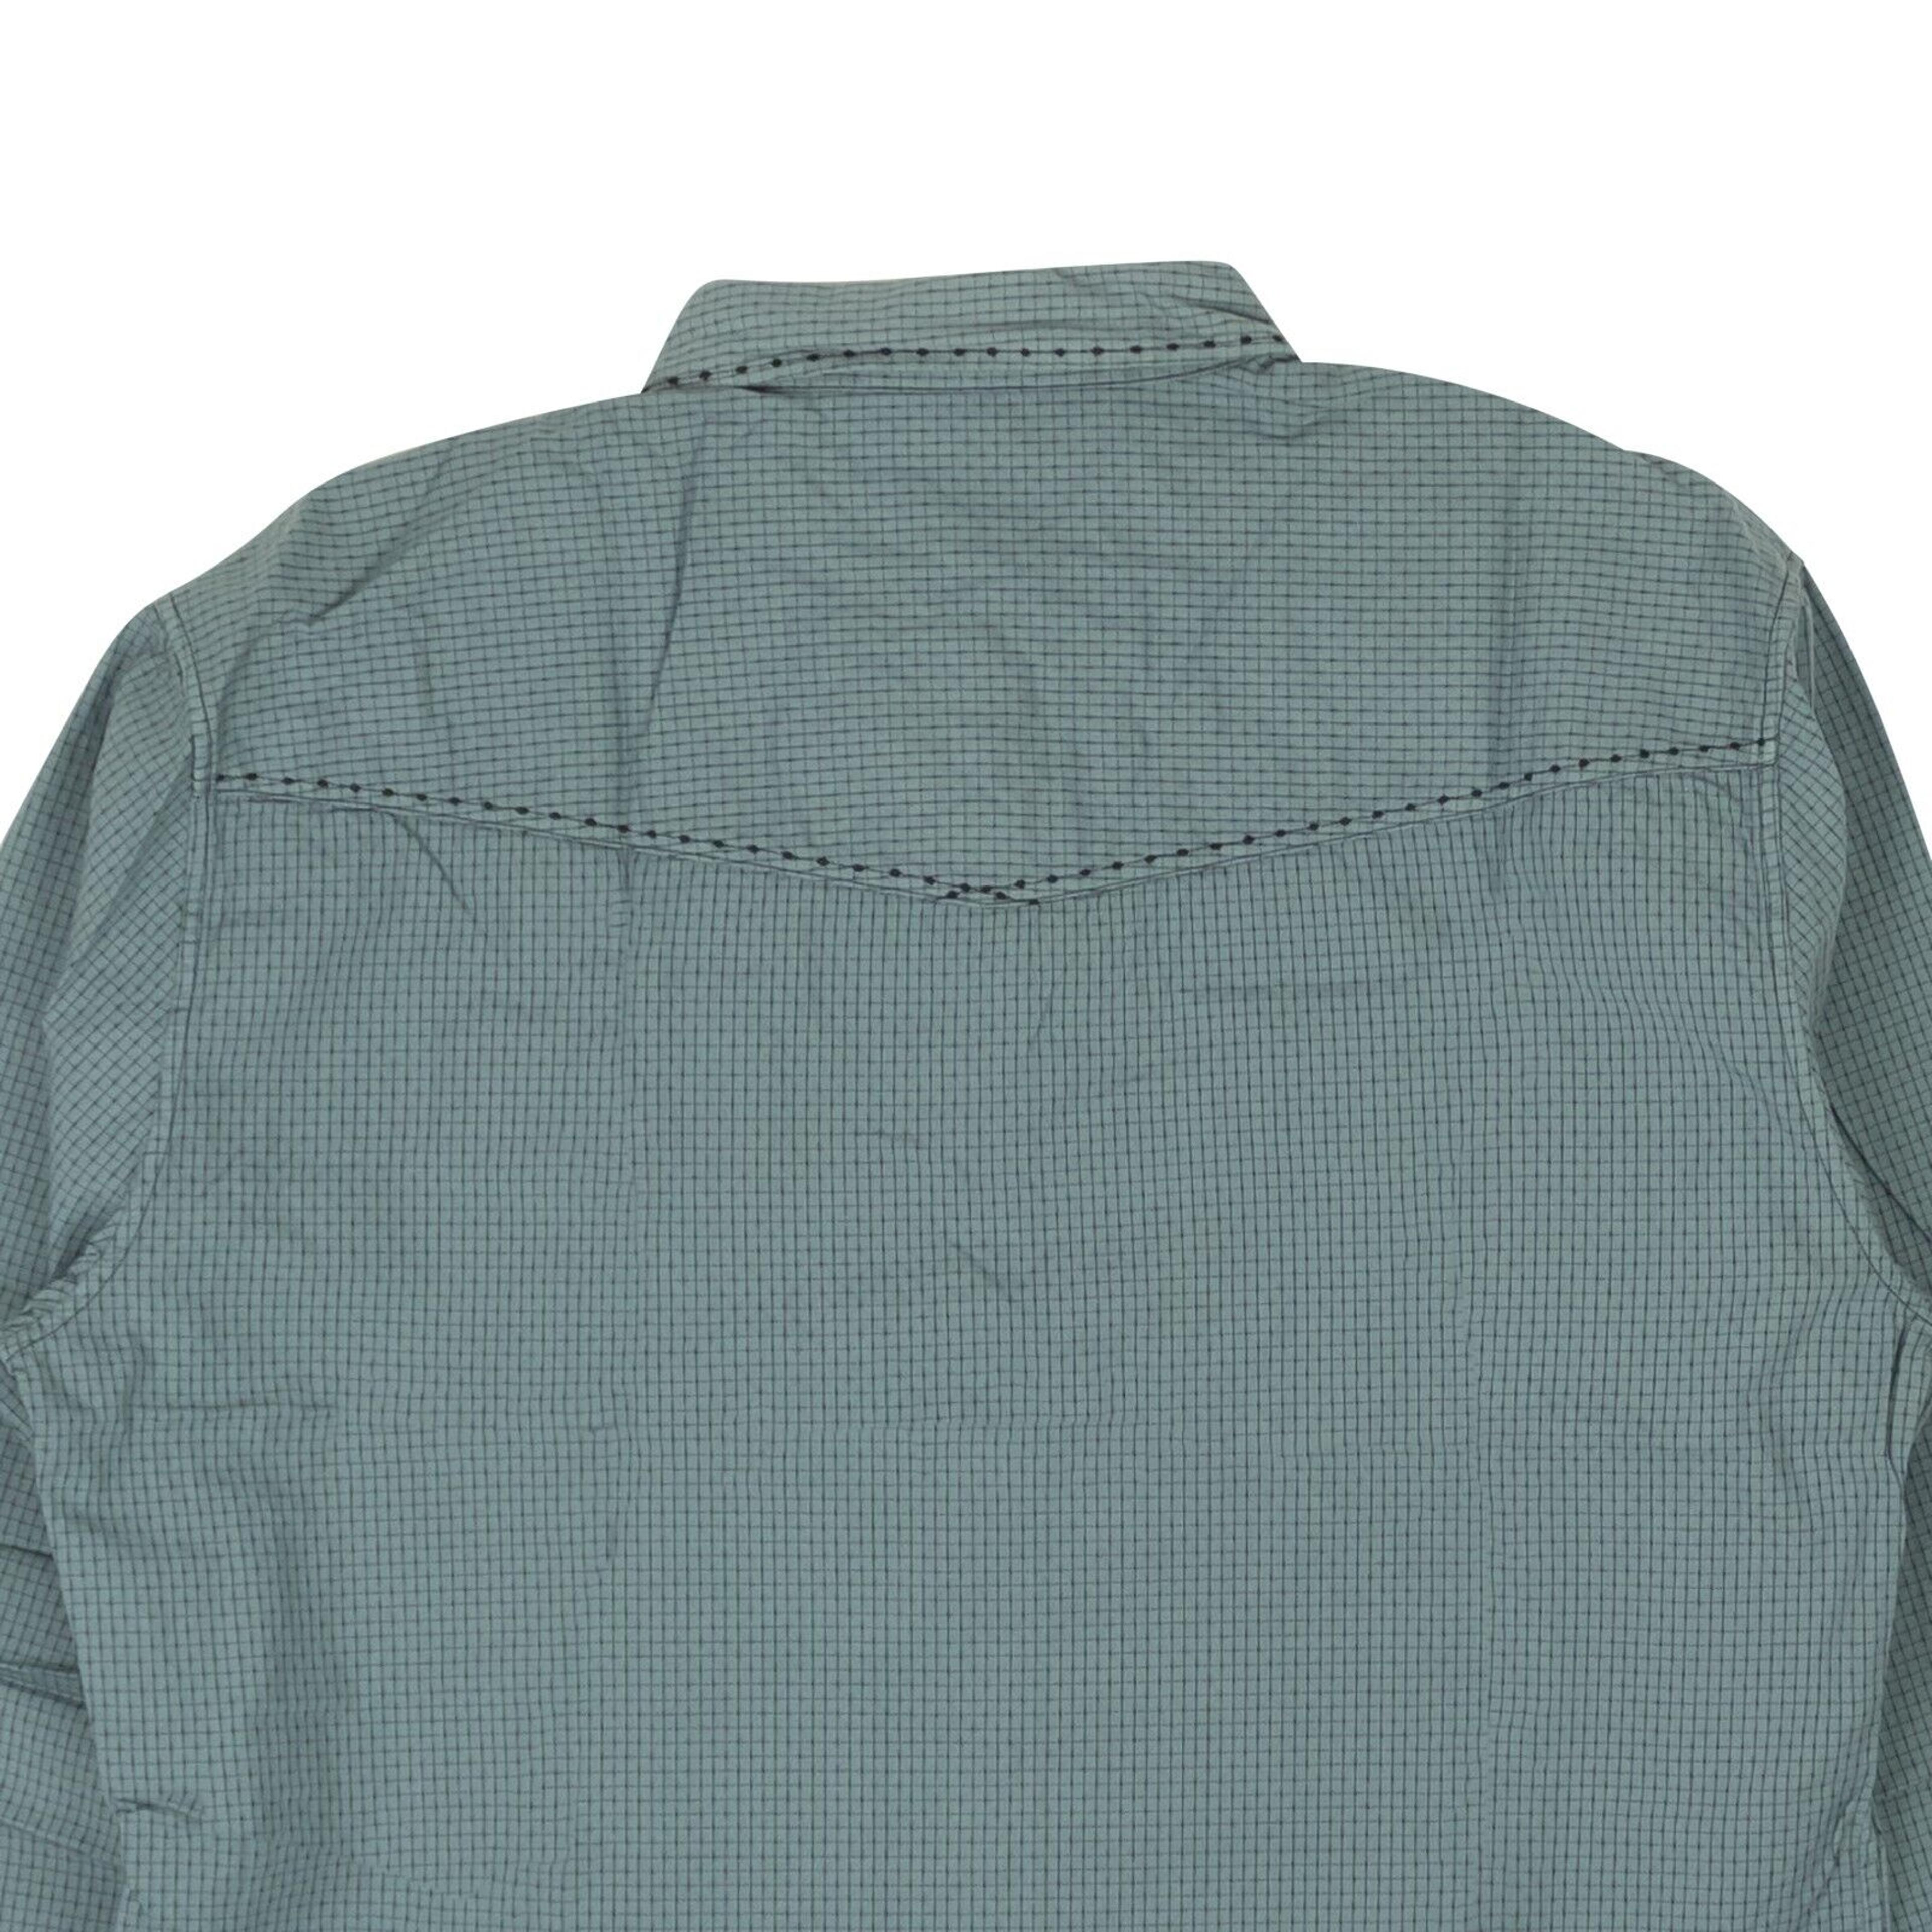 Alternate View 3 of Tweedia Blue Overdyed Cotton Textured Shirt